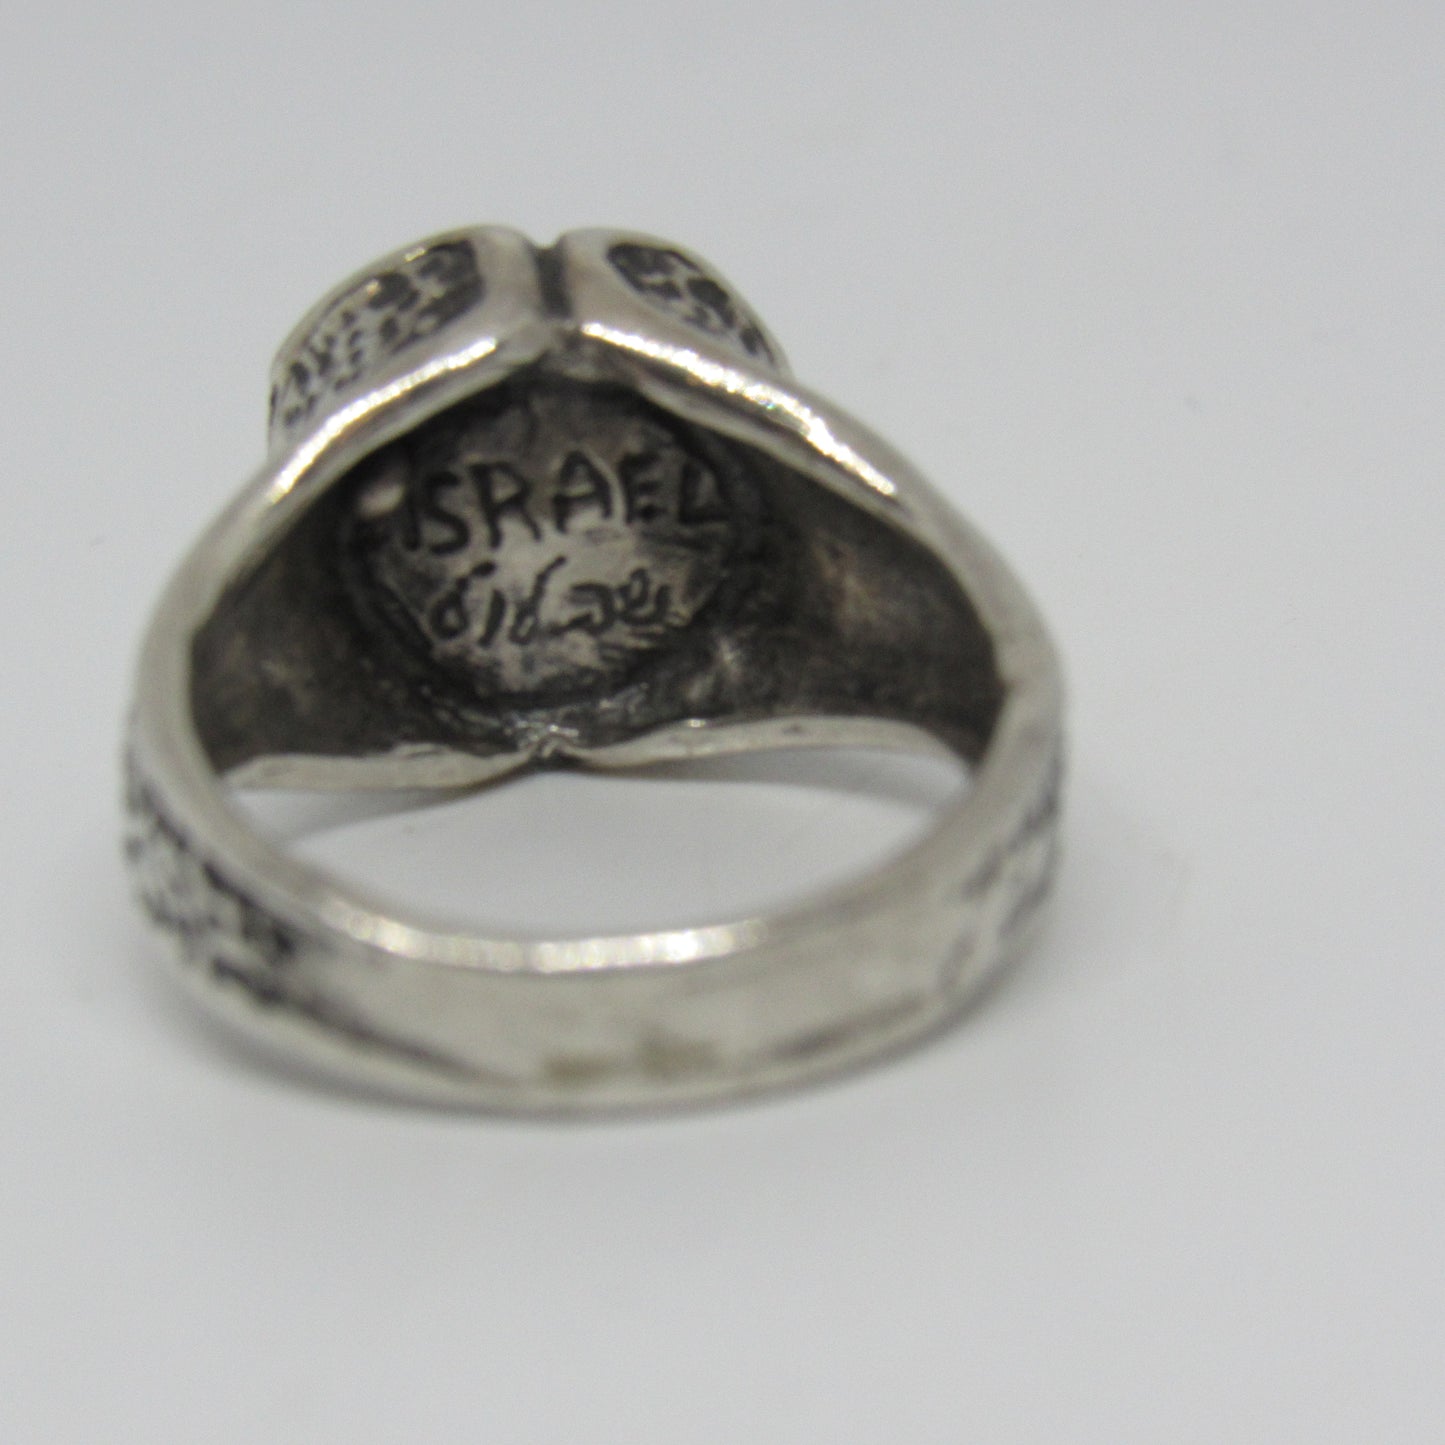 Vintage DIDAE SHABLOOL Sterling Silver Pearl Ring - Sz 7